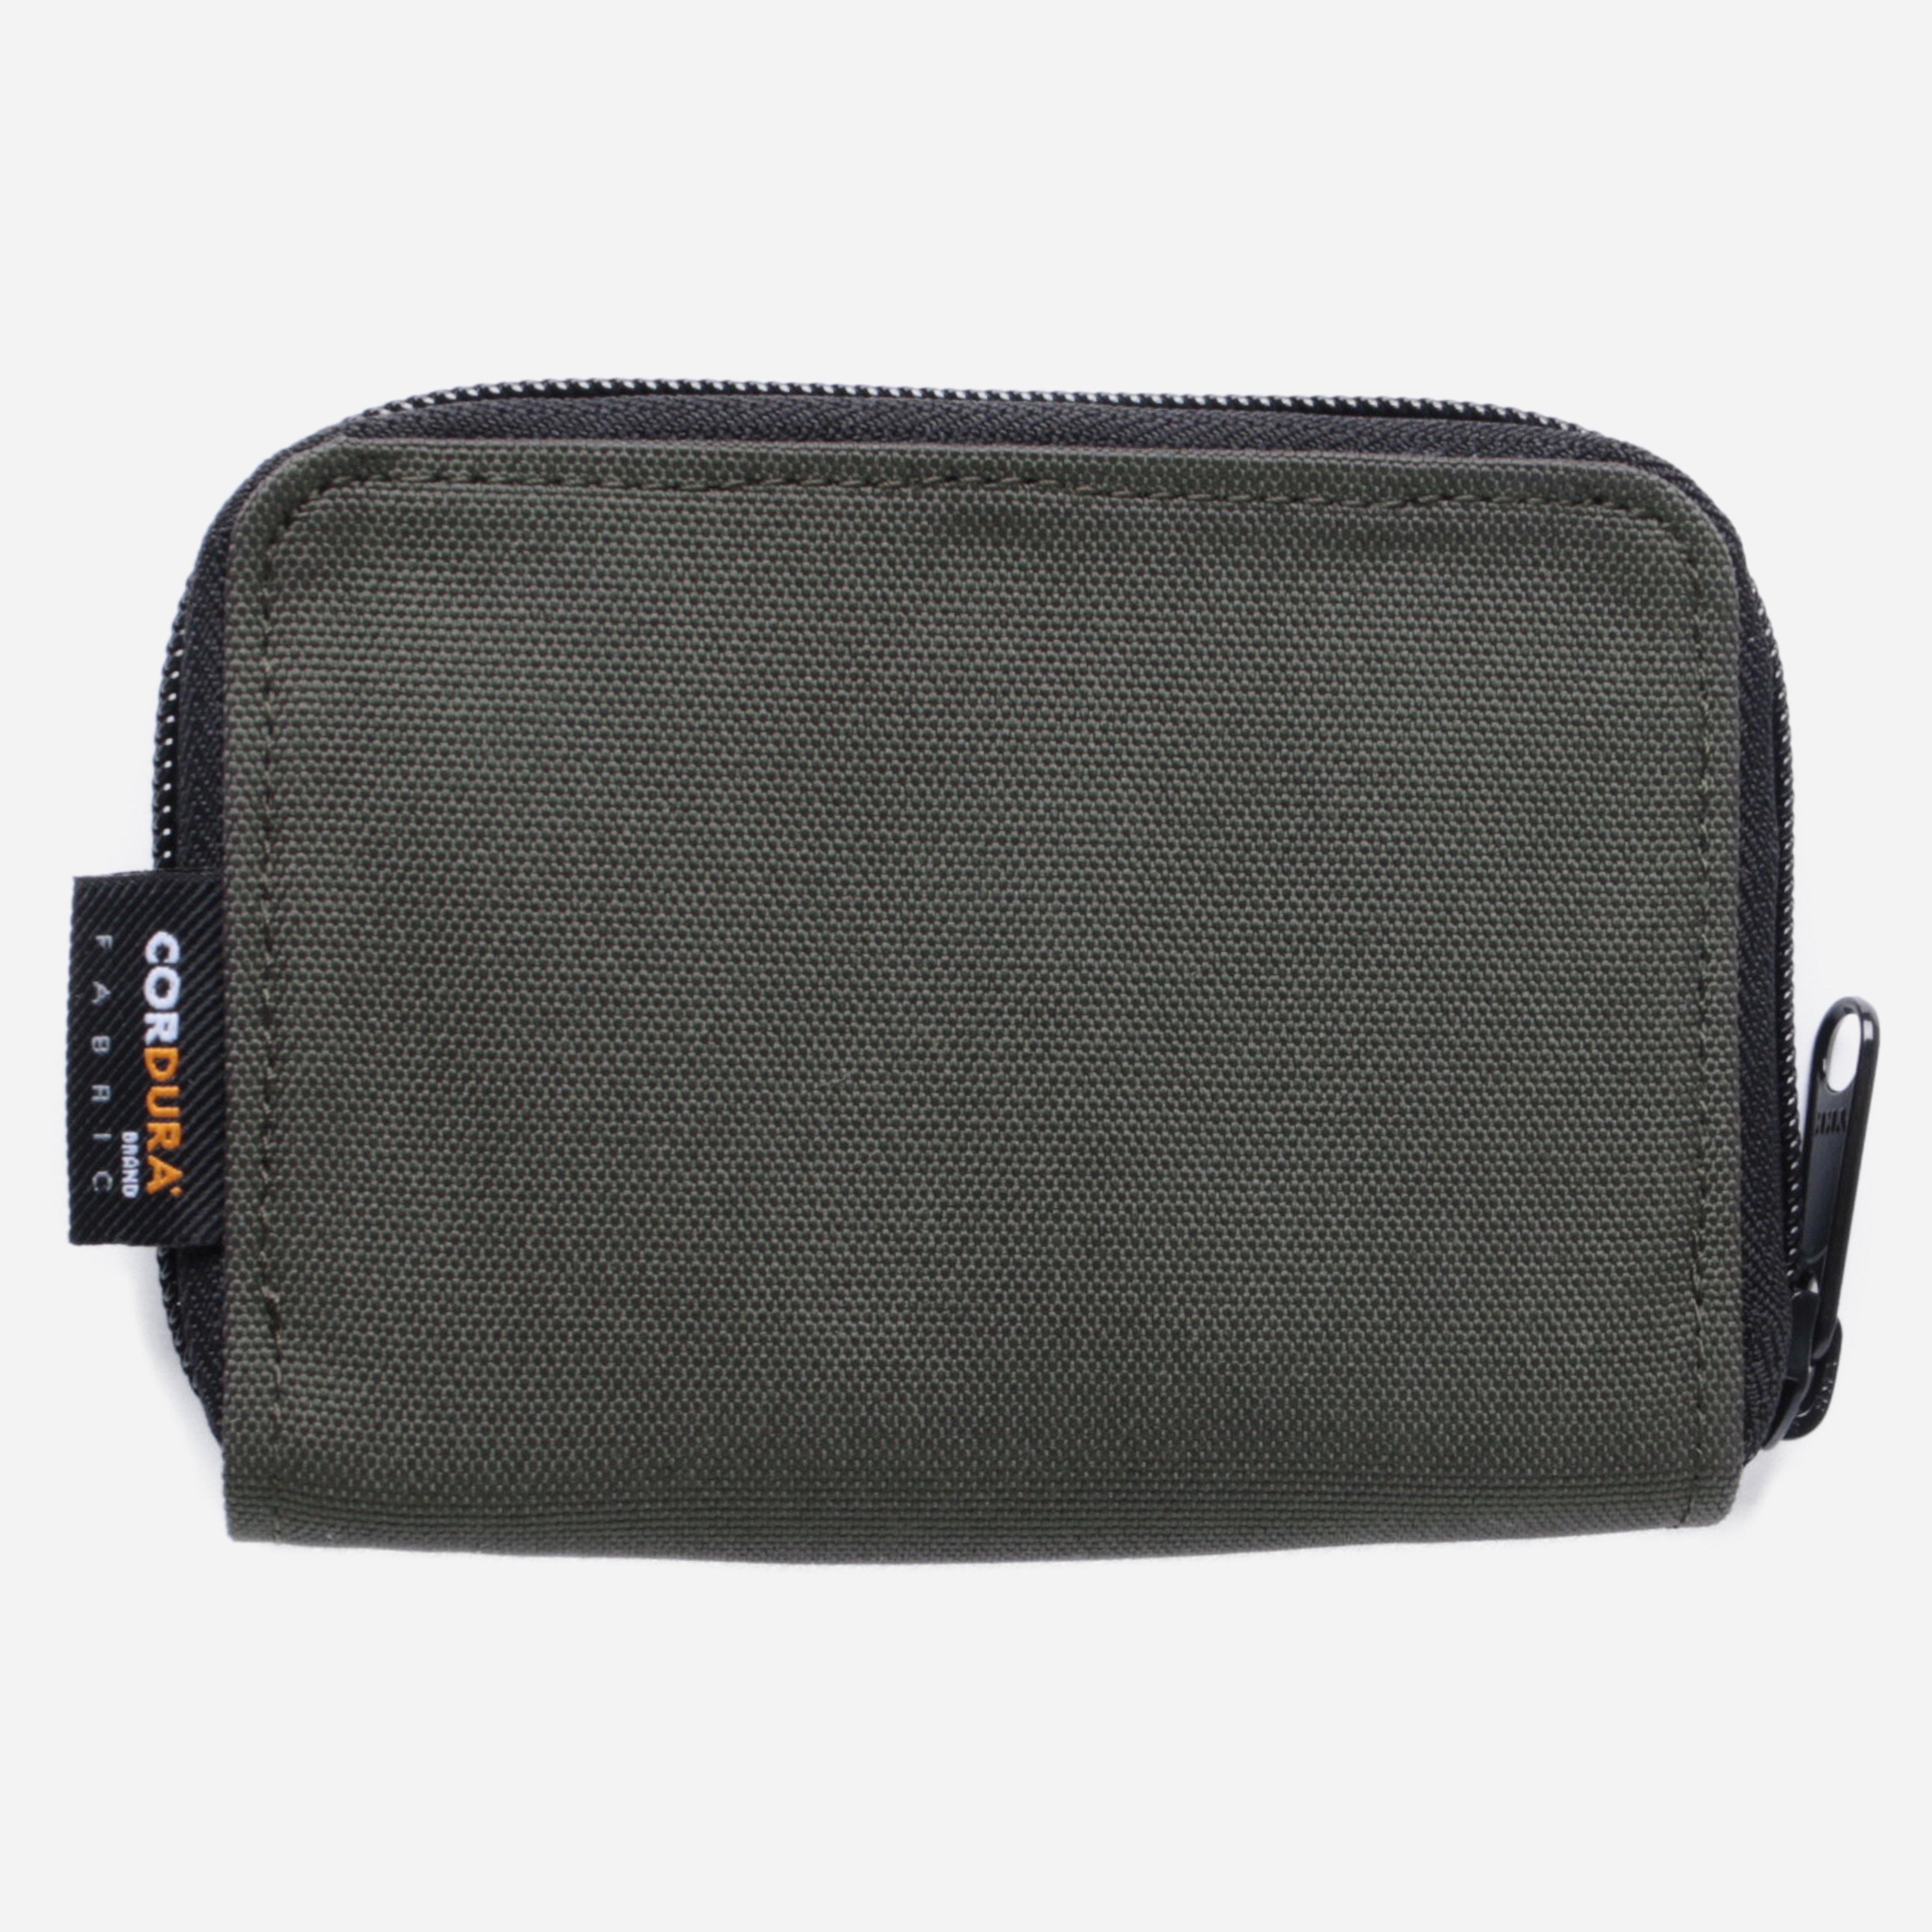 Carhartt WIP Payton Midi Zip Wallet in Gray for Men - Lyst